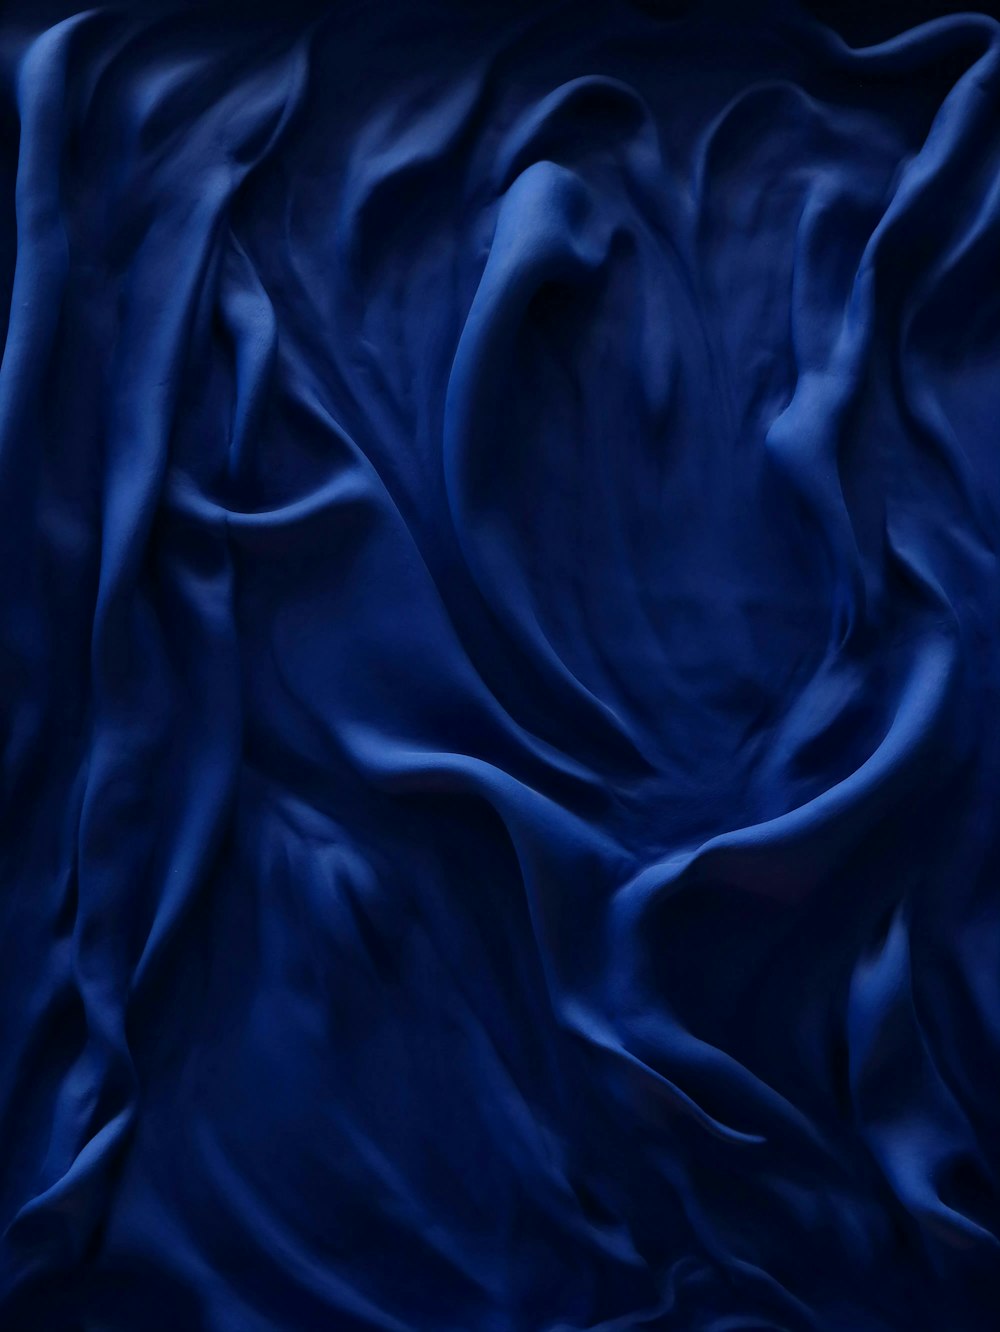 a dark blue background with a wavy pattern